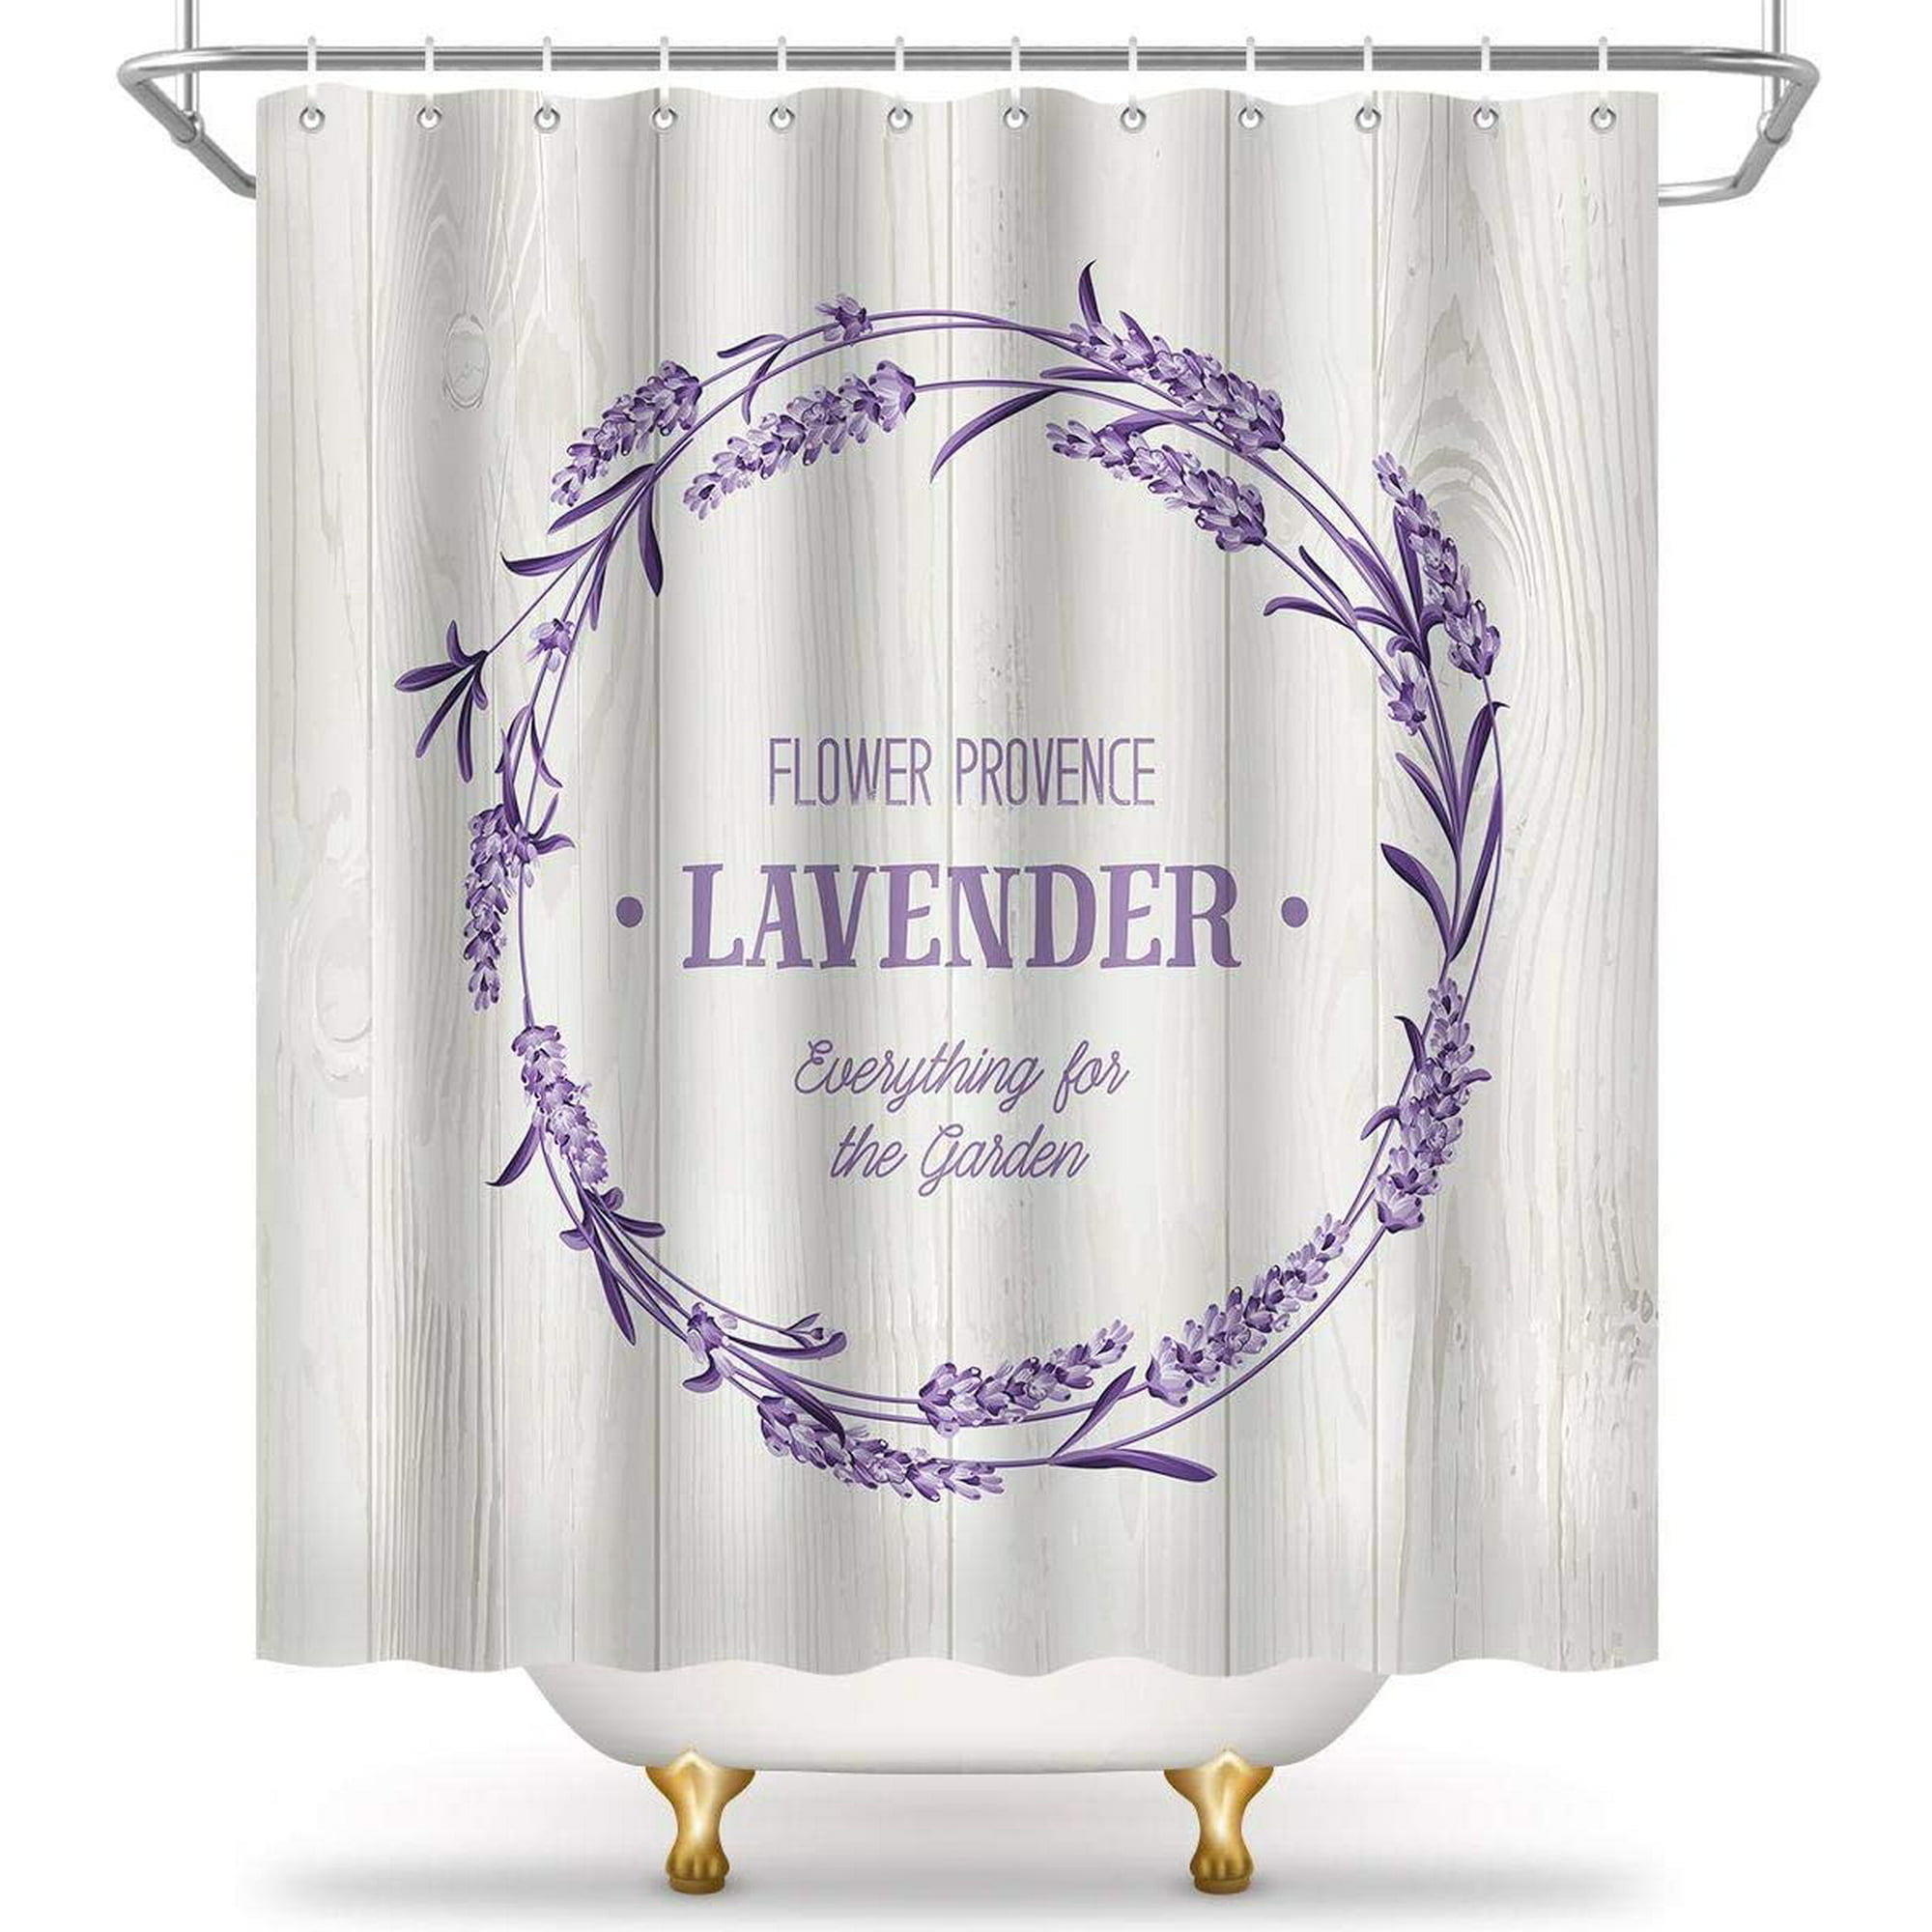 Country Primitive Shower Curtain Liner, Lavender Shower Curtain Liner